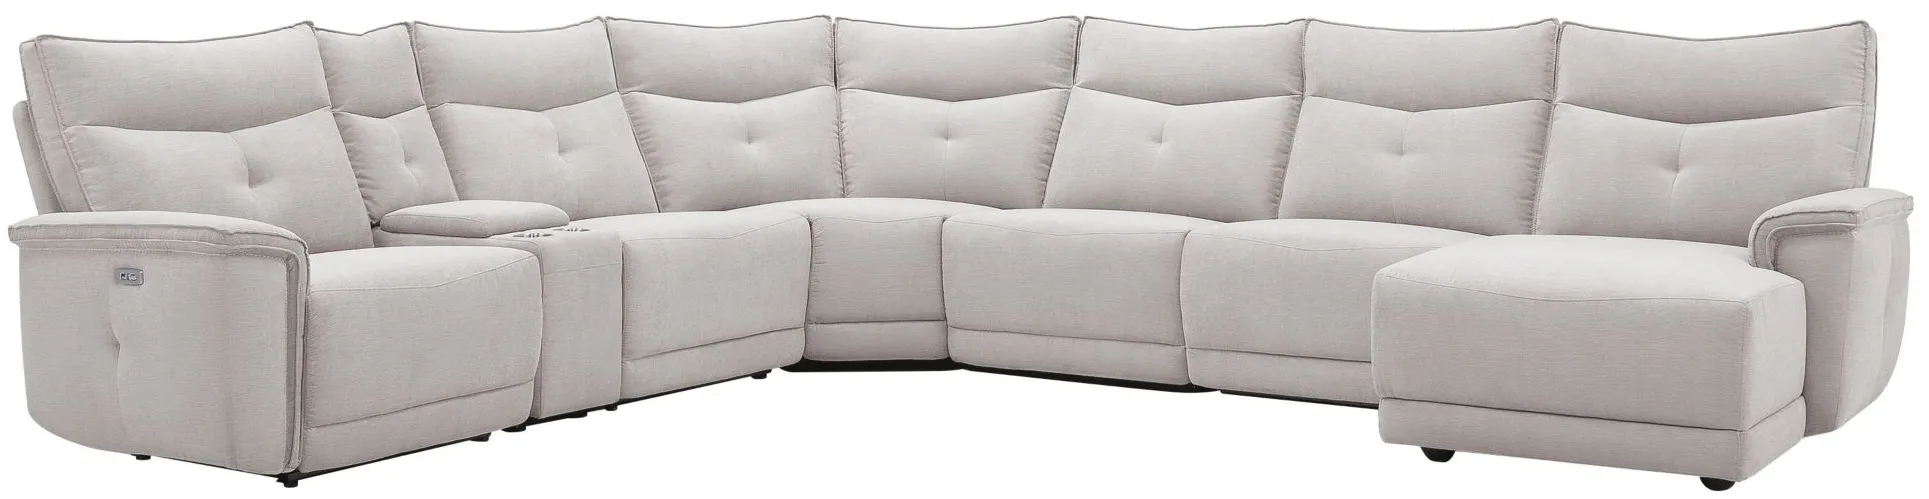 Graceland 7-pc. Sectional Sofa w/Power Headrest in Mist Gray by Bellanest